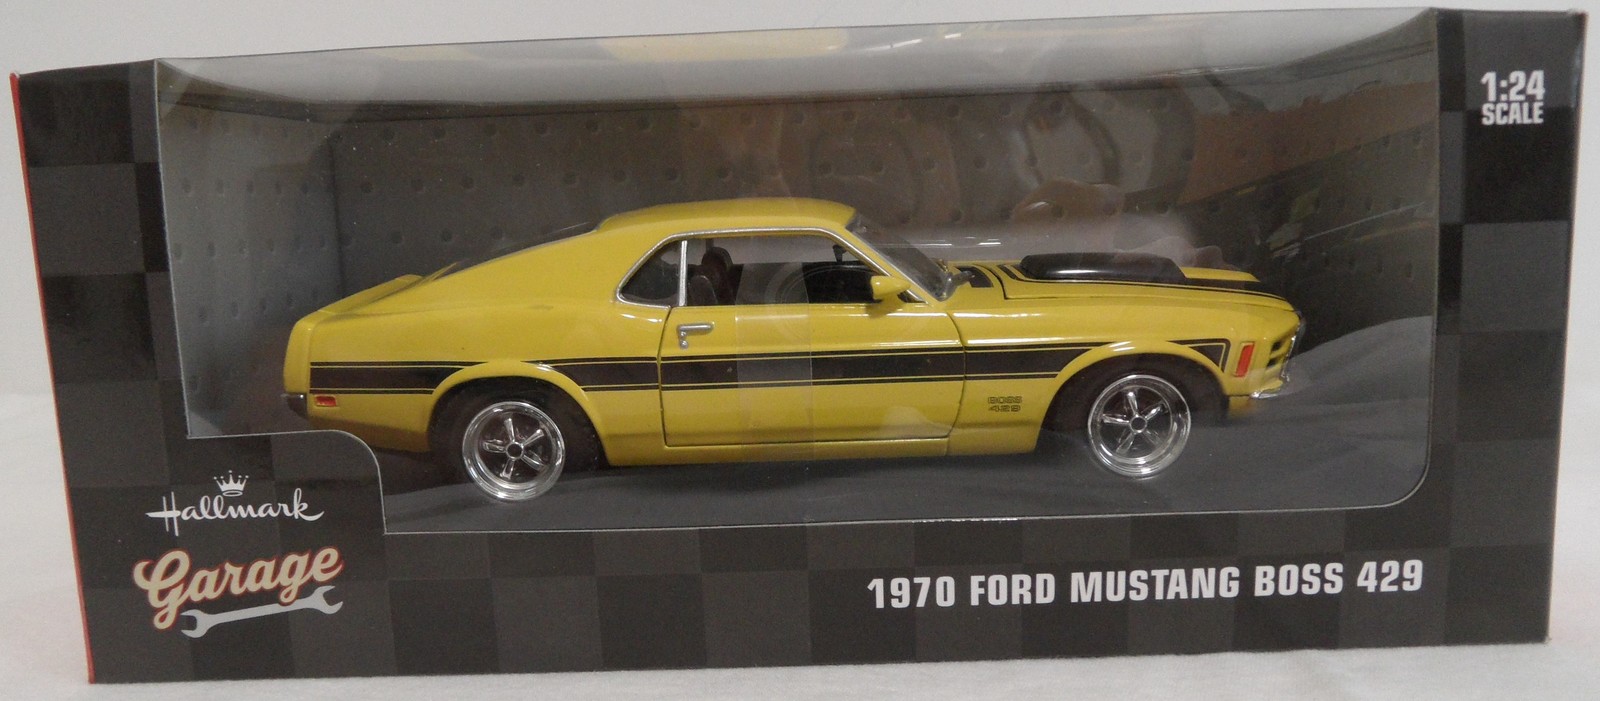 2015 Hallmark Garage 1970 Ford Mustang Boss 429 Die-cast Model Motormax Toy  - $35.00